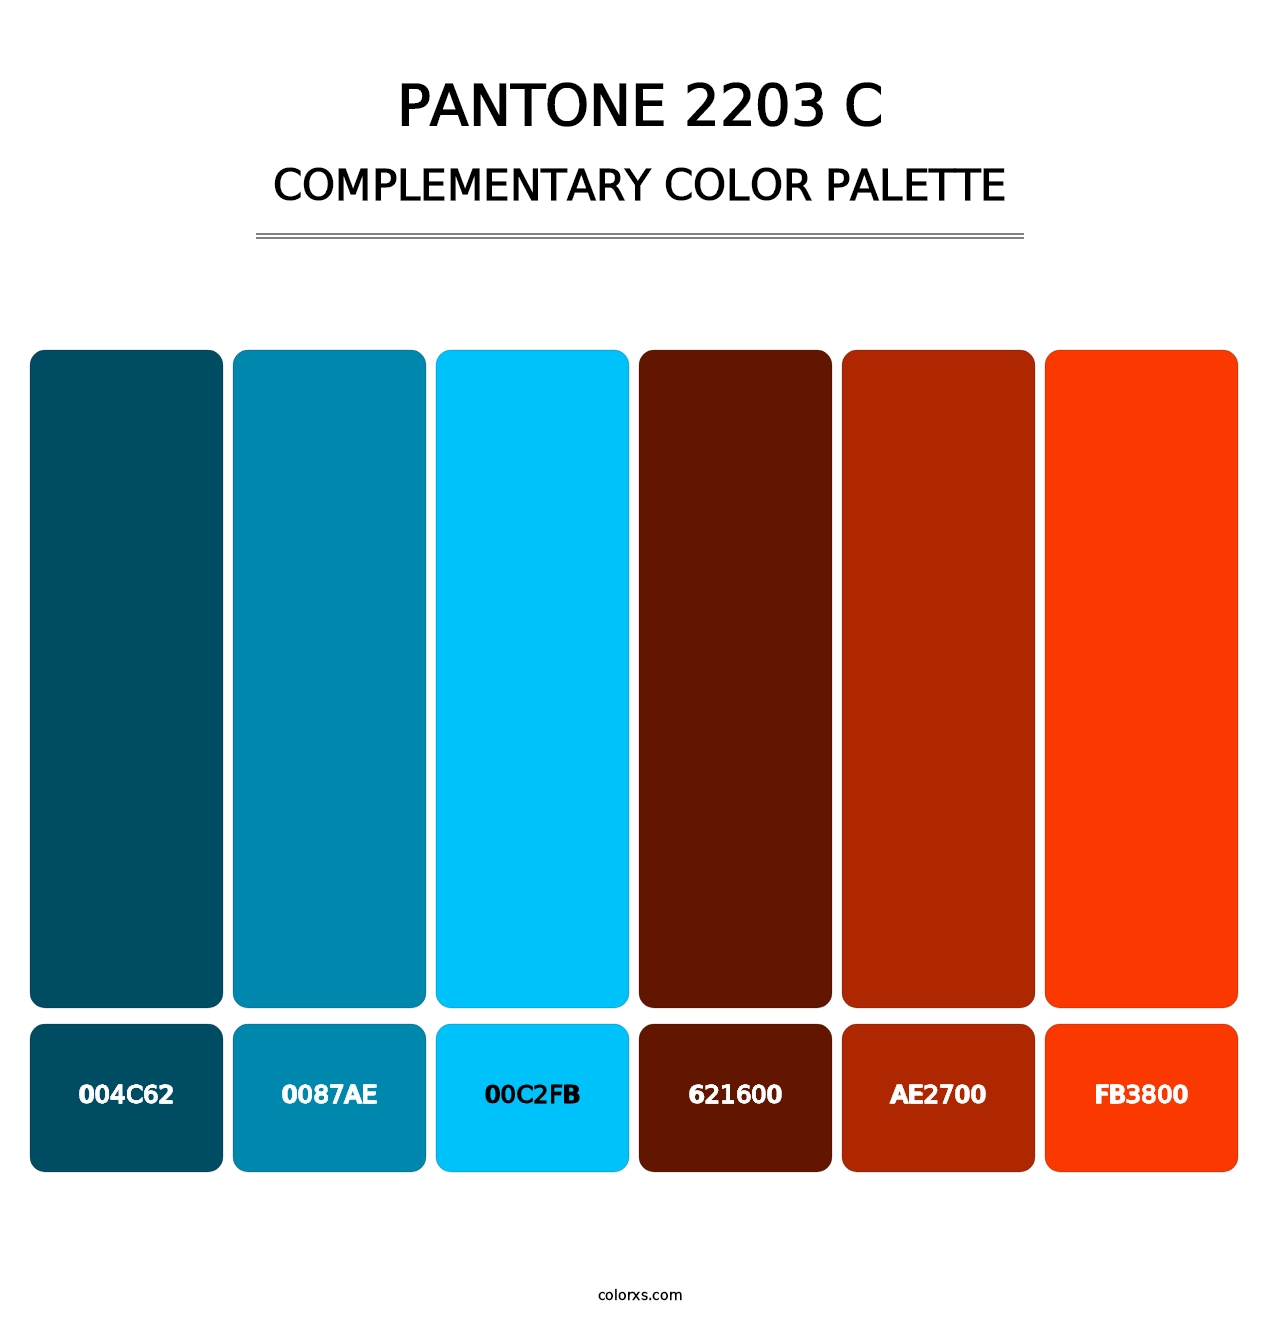 PANTONE 2203 C - Complementary Color Palette